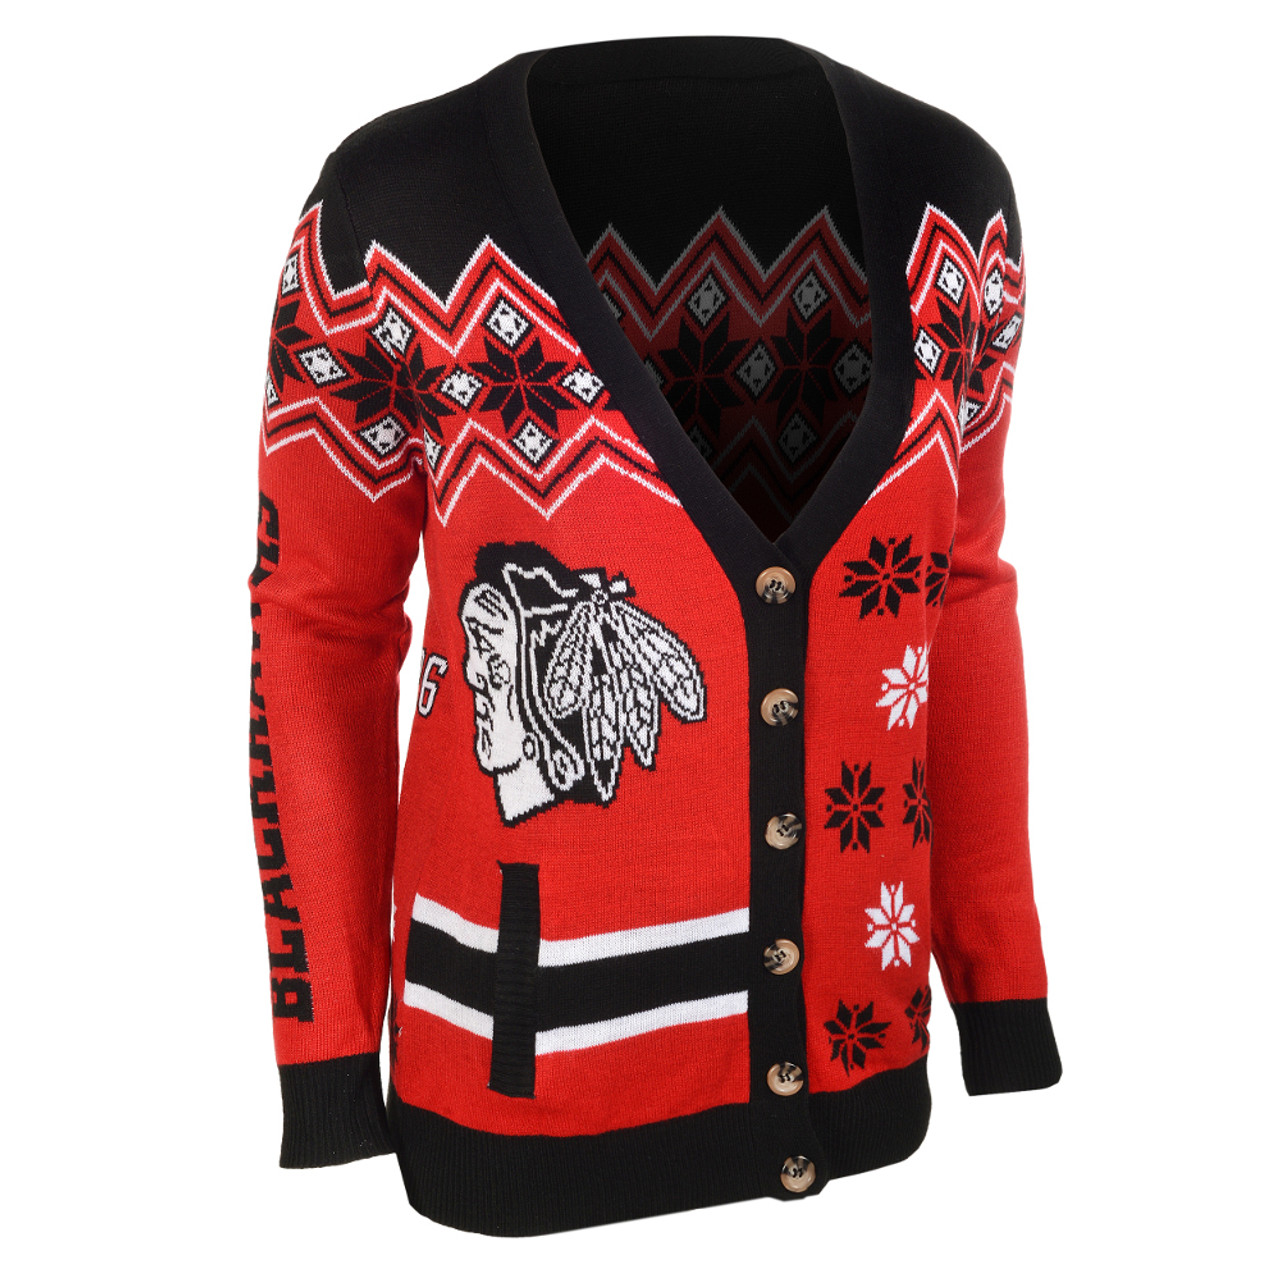 Jonathan Toews #19 (Chicago Blackhawks) NHL Player Ugly Sweater